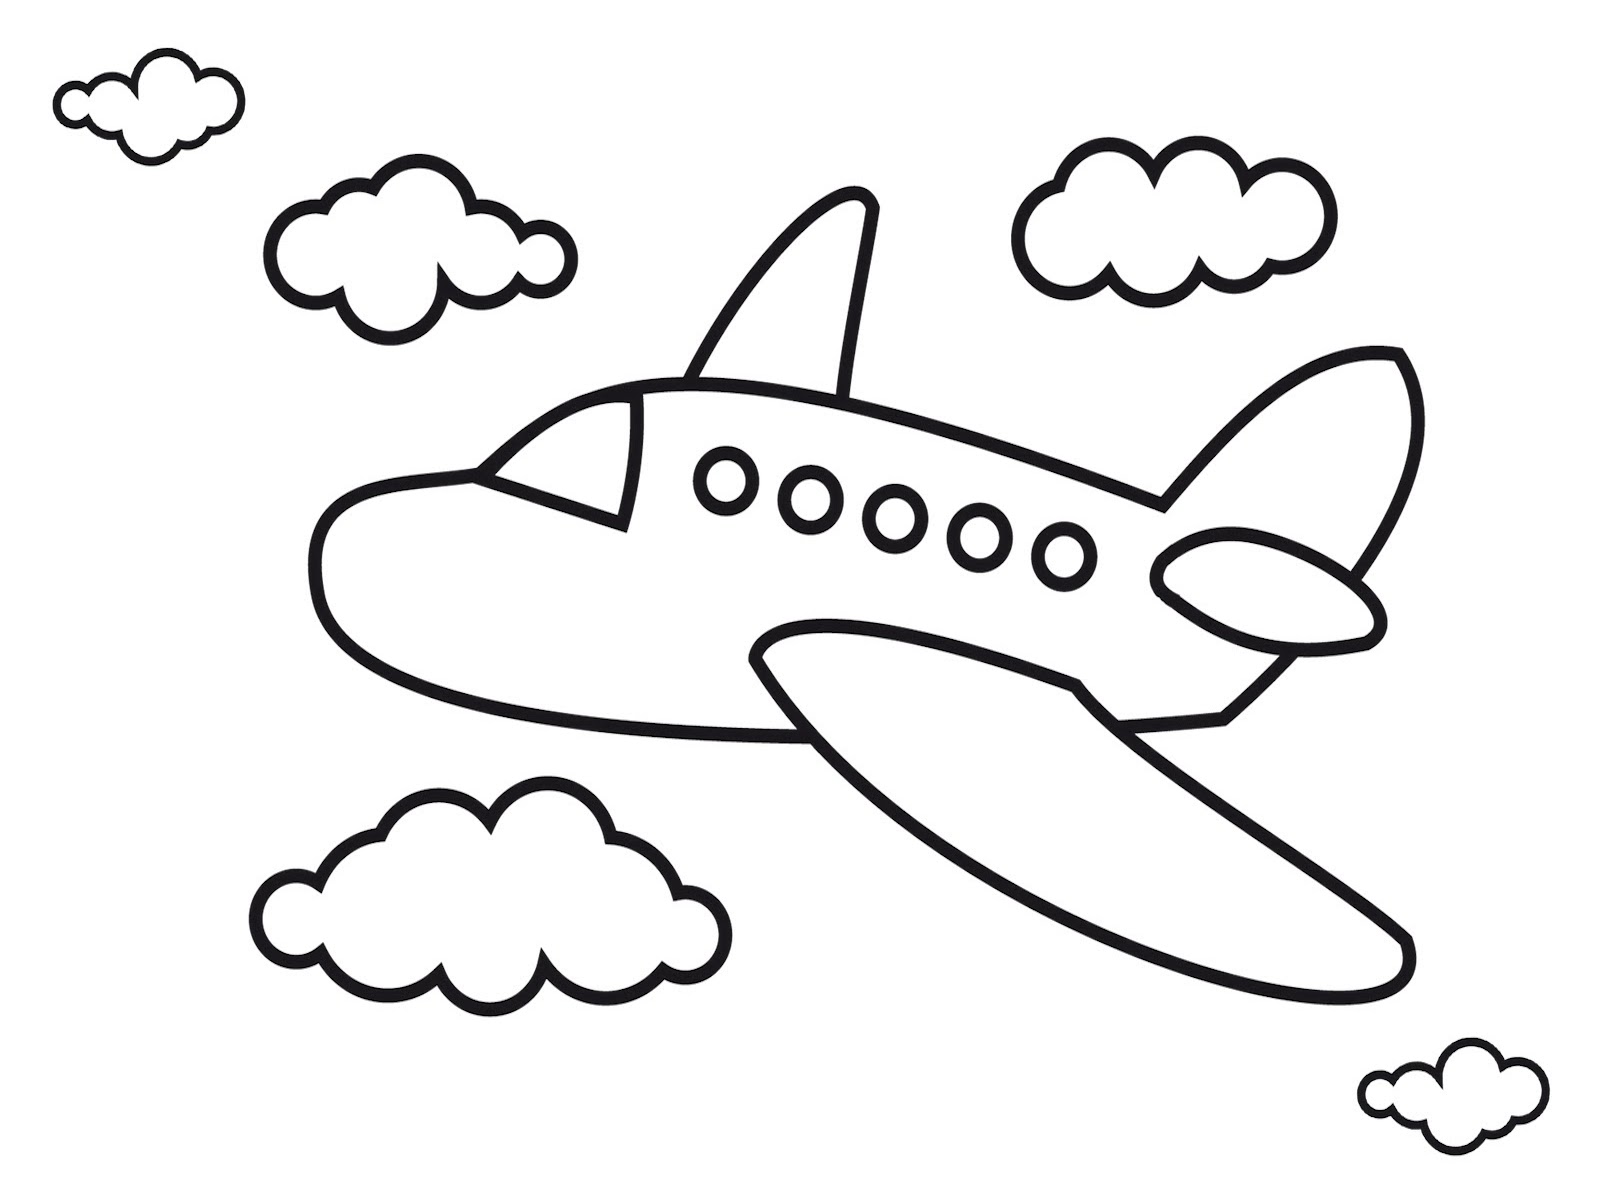 How to Draw an airplane  Easy Drawing Lesson for Kids Vẽ Máy bay Dạy bé  học vẽ máy bay  YouTube